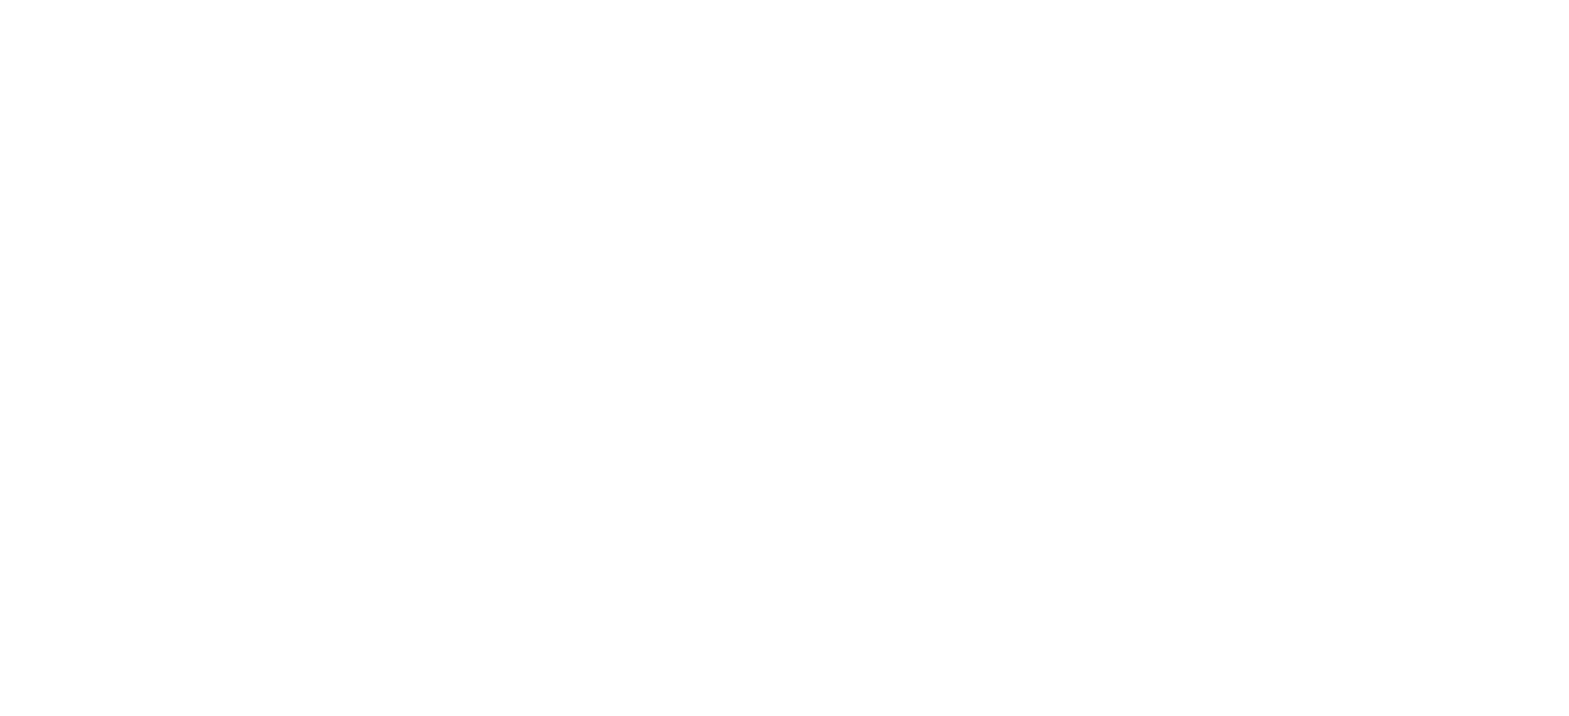 Thai Oil logo large for dark backgrounds (transparent PNG)